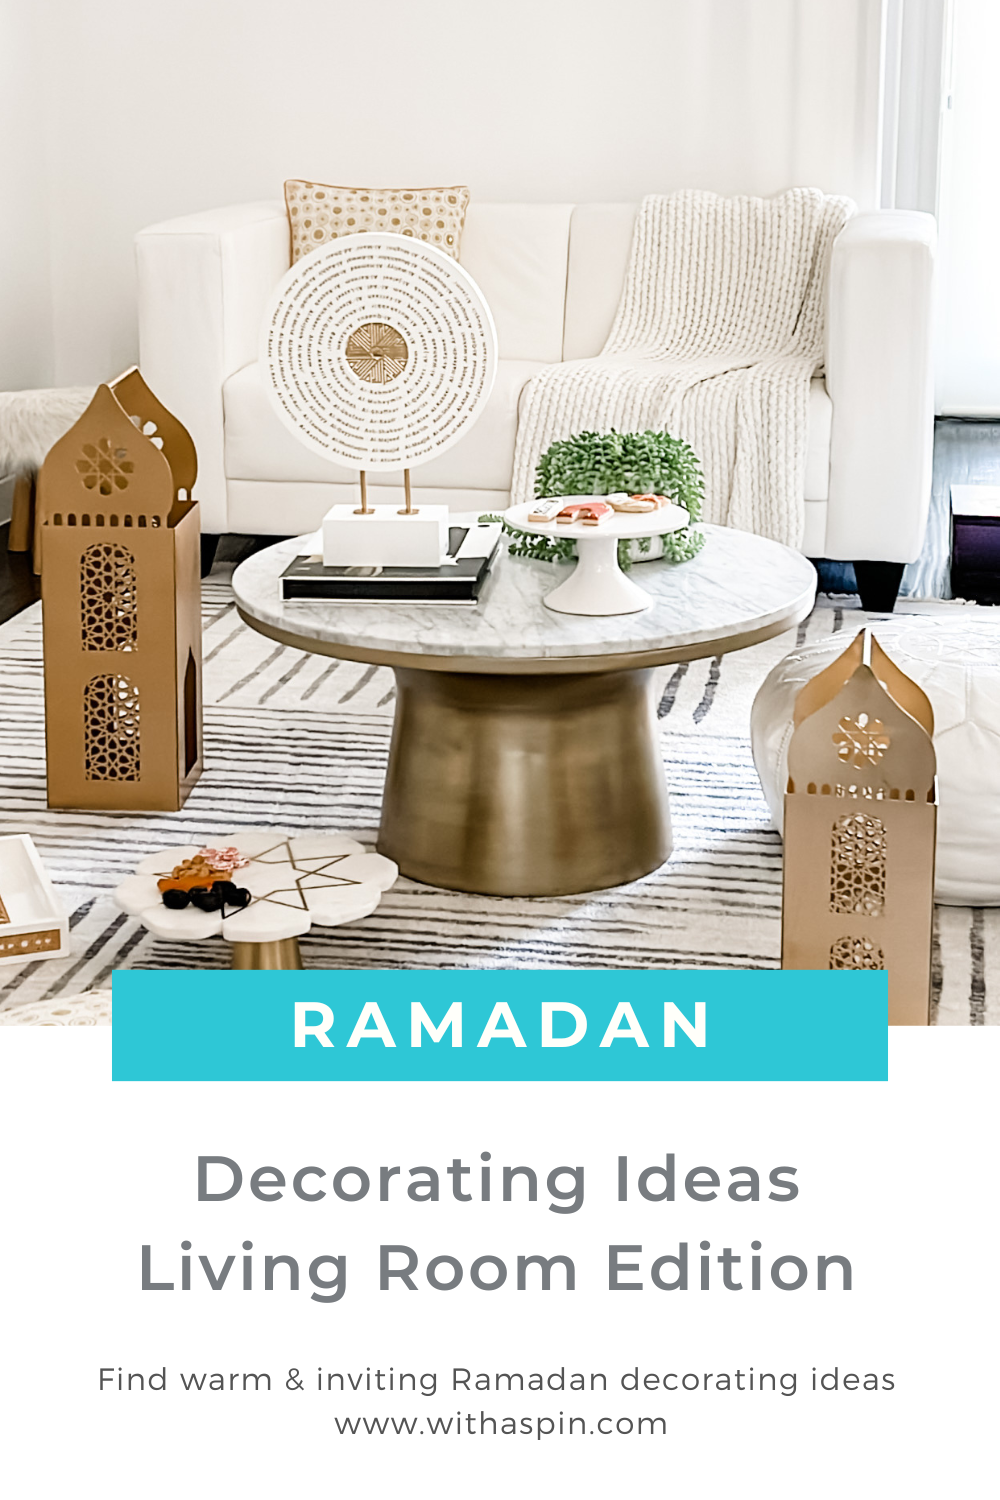 Ramadan Decorating Ideas for Living Room